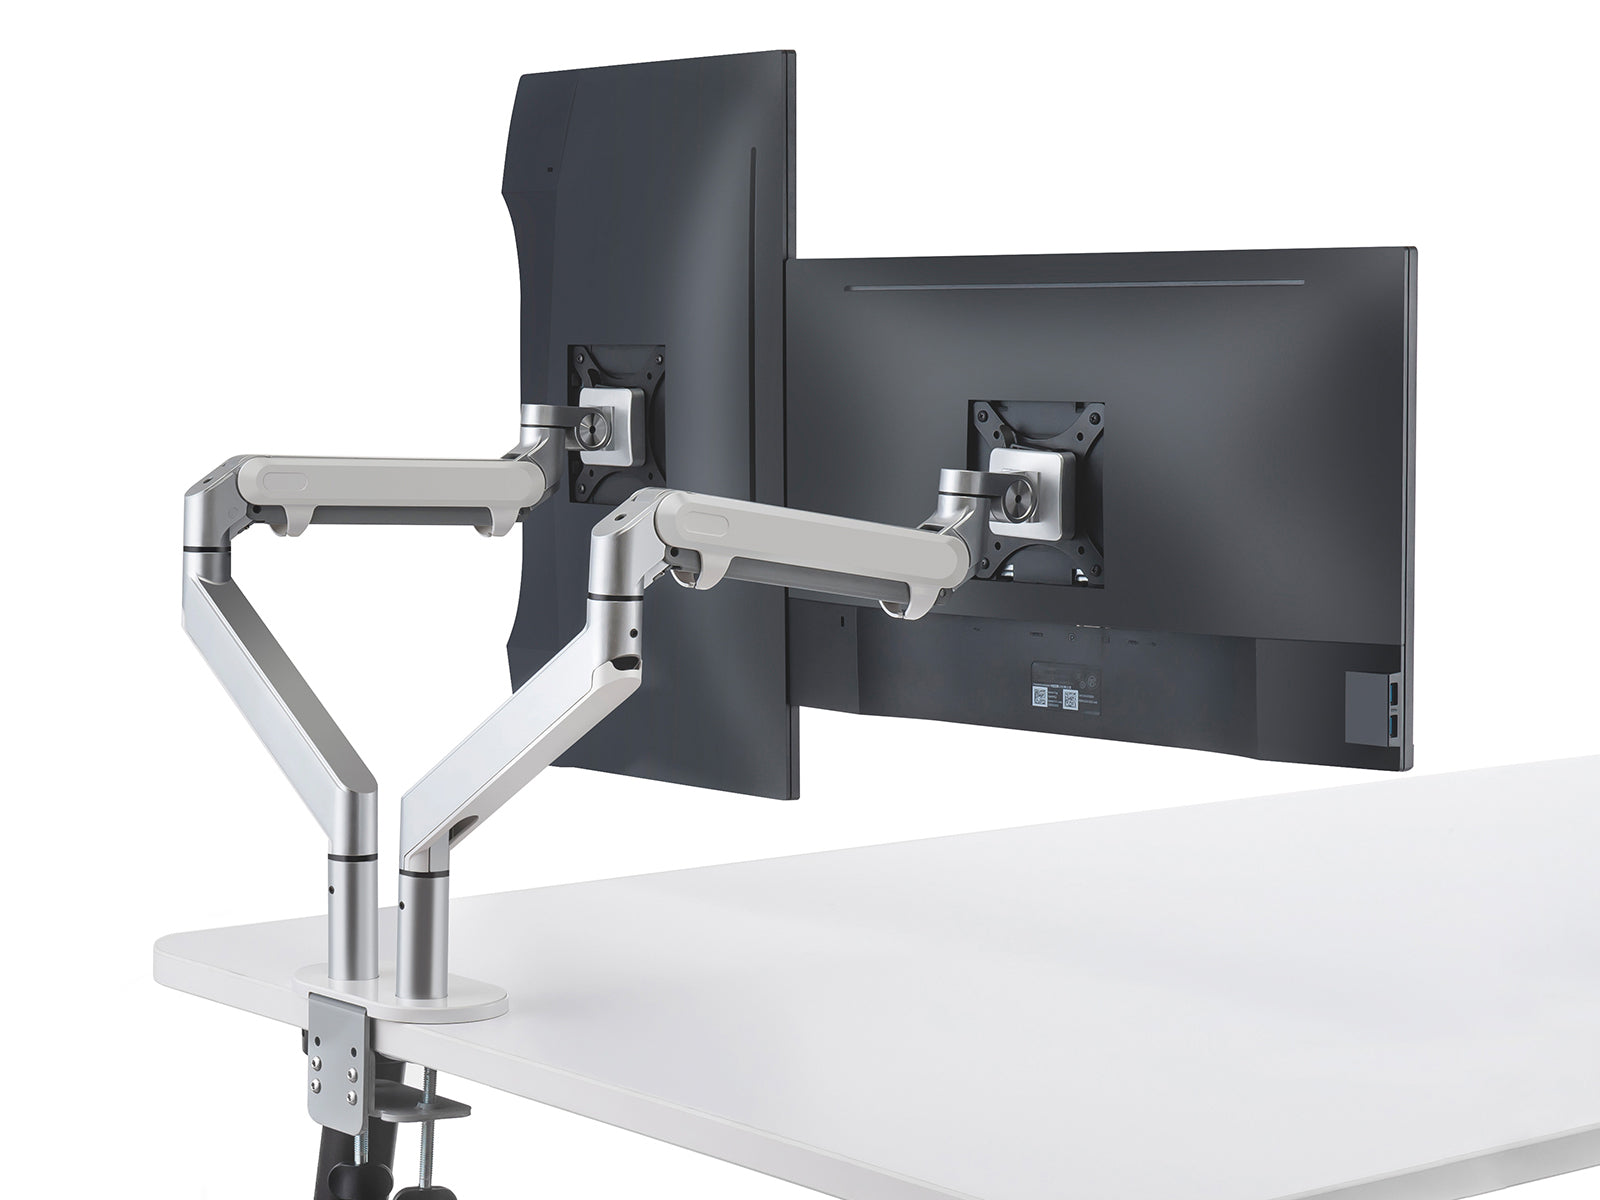 Flex Dual Monitor Arm with Laptop Tray- Gas Spring
VORII